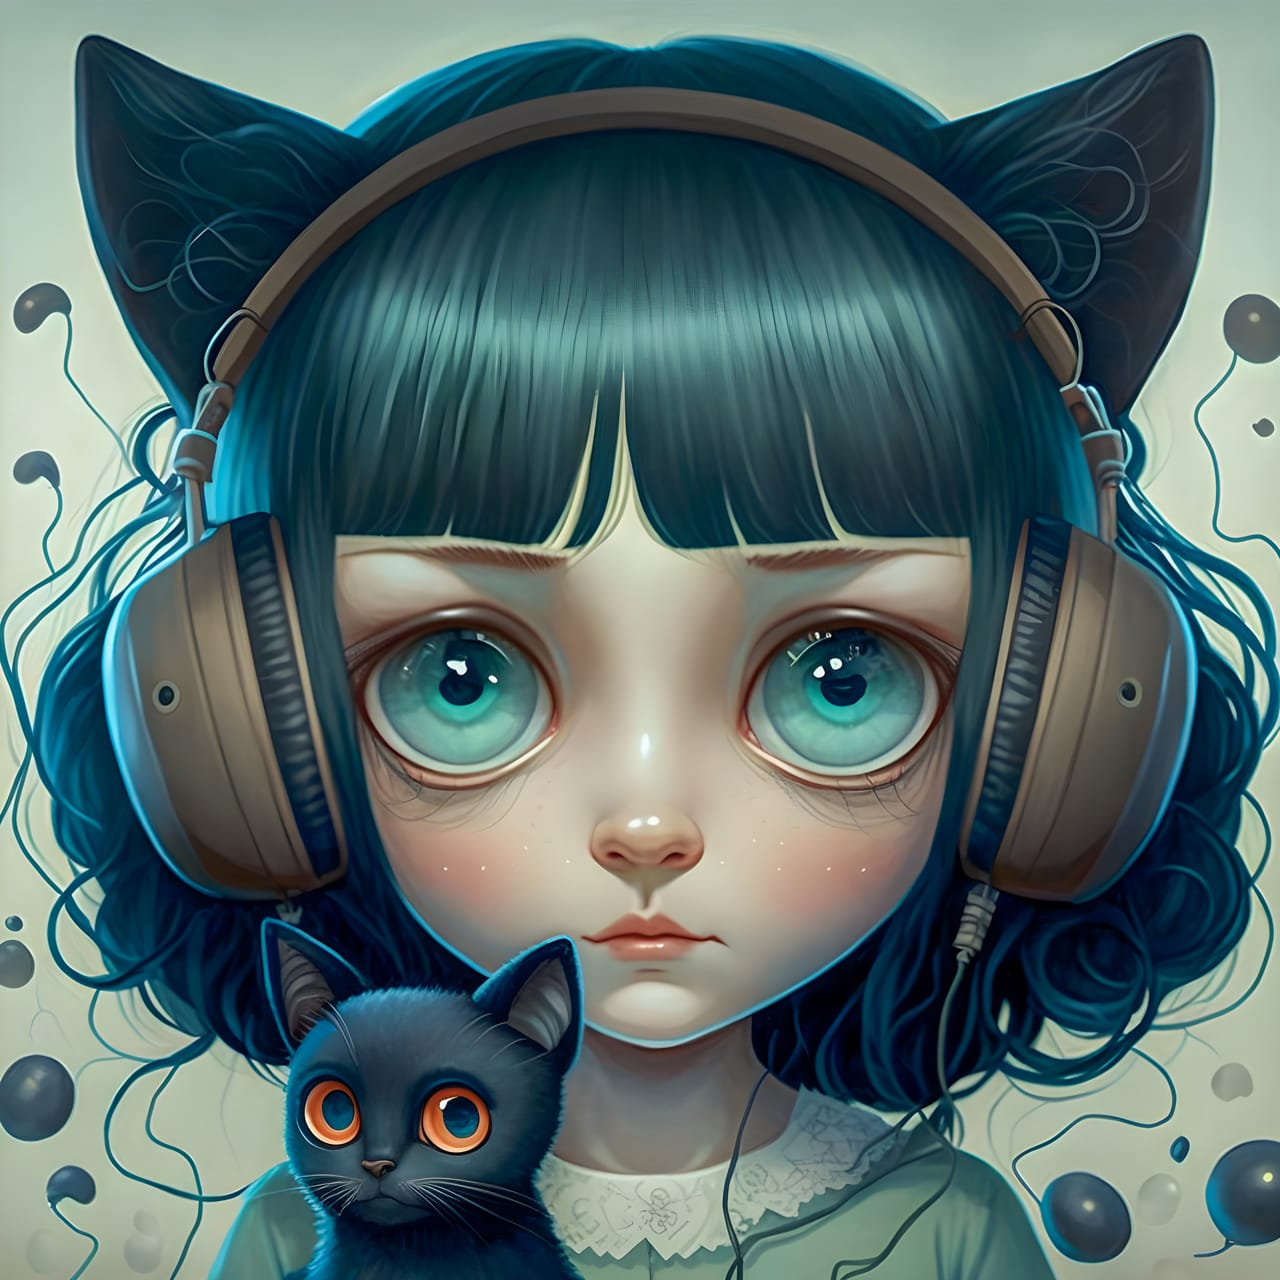 Cute kawaii anime brunette girl wearing headphones with cat ears